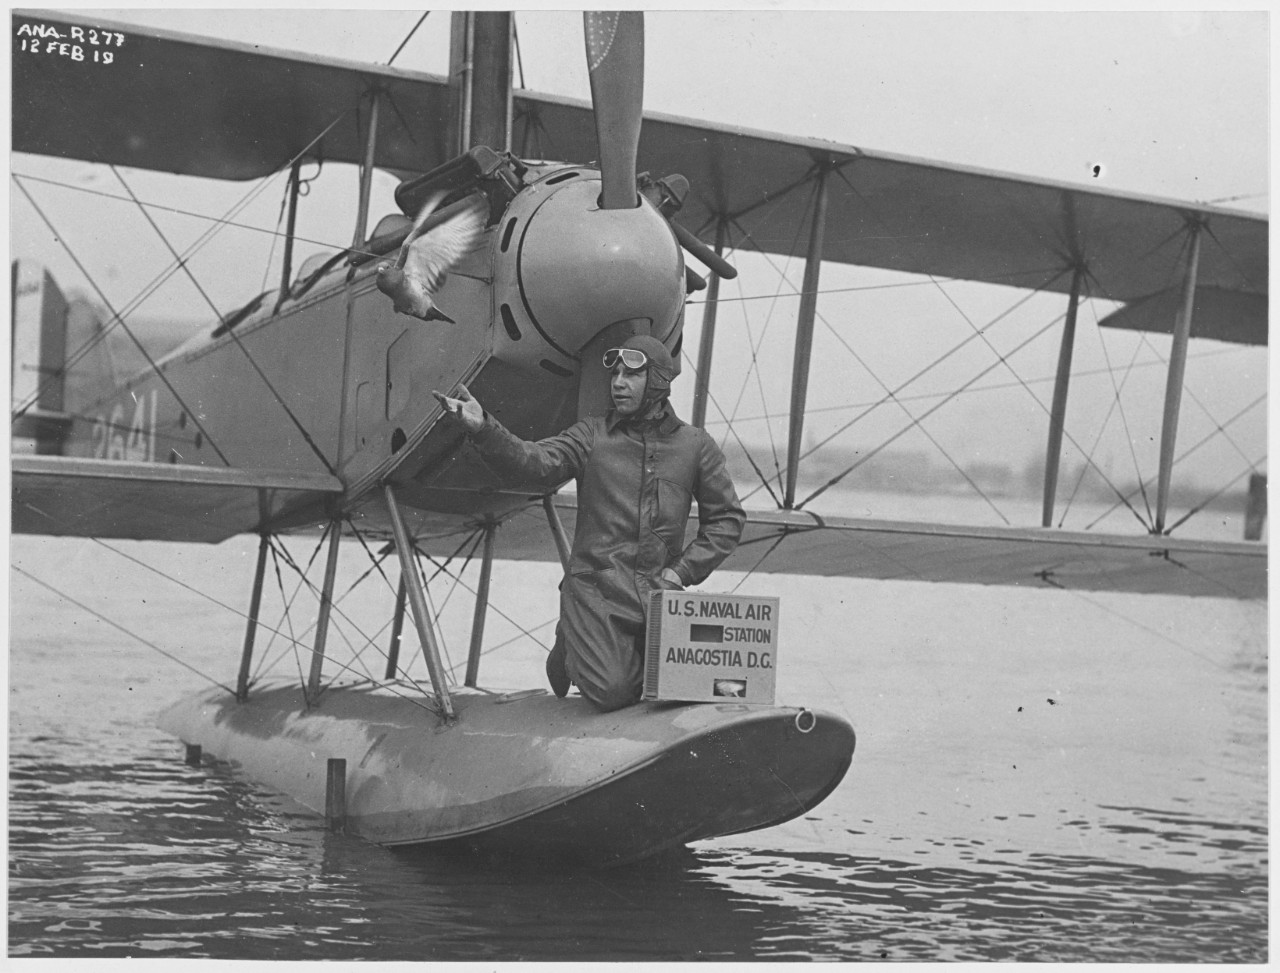 Man releases Carrier Pigeon, U.S. Naval Air Station, Anacostia, Washington, D.C.  February 12, 1919.